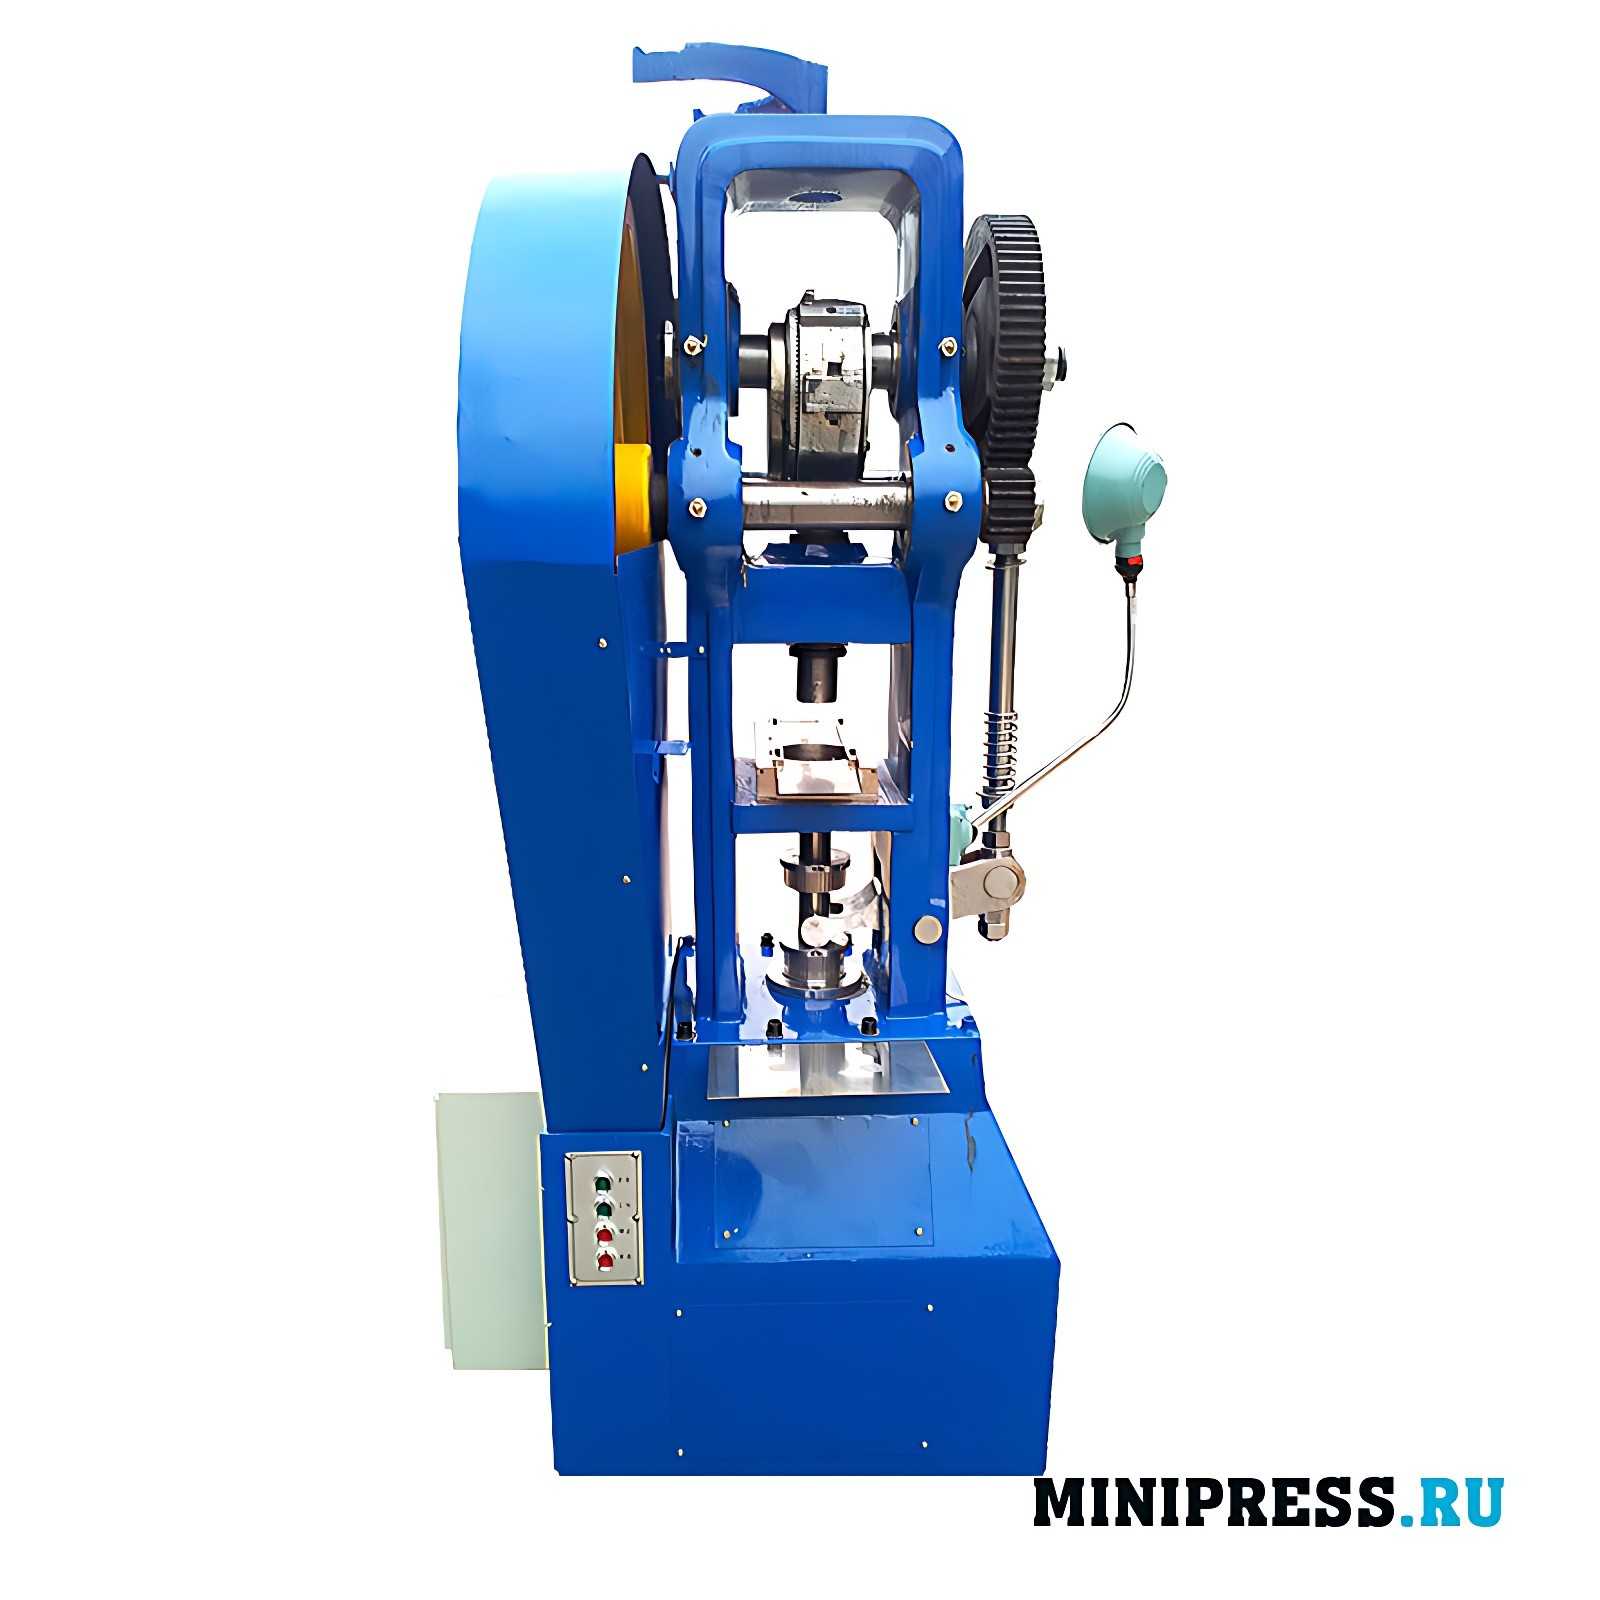 Mechanical tablet press PP-28